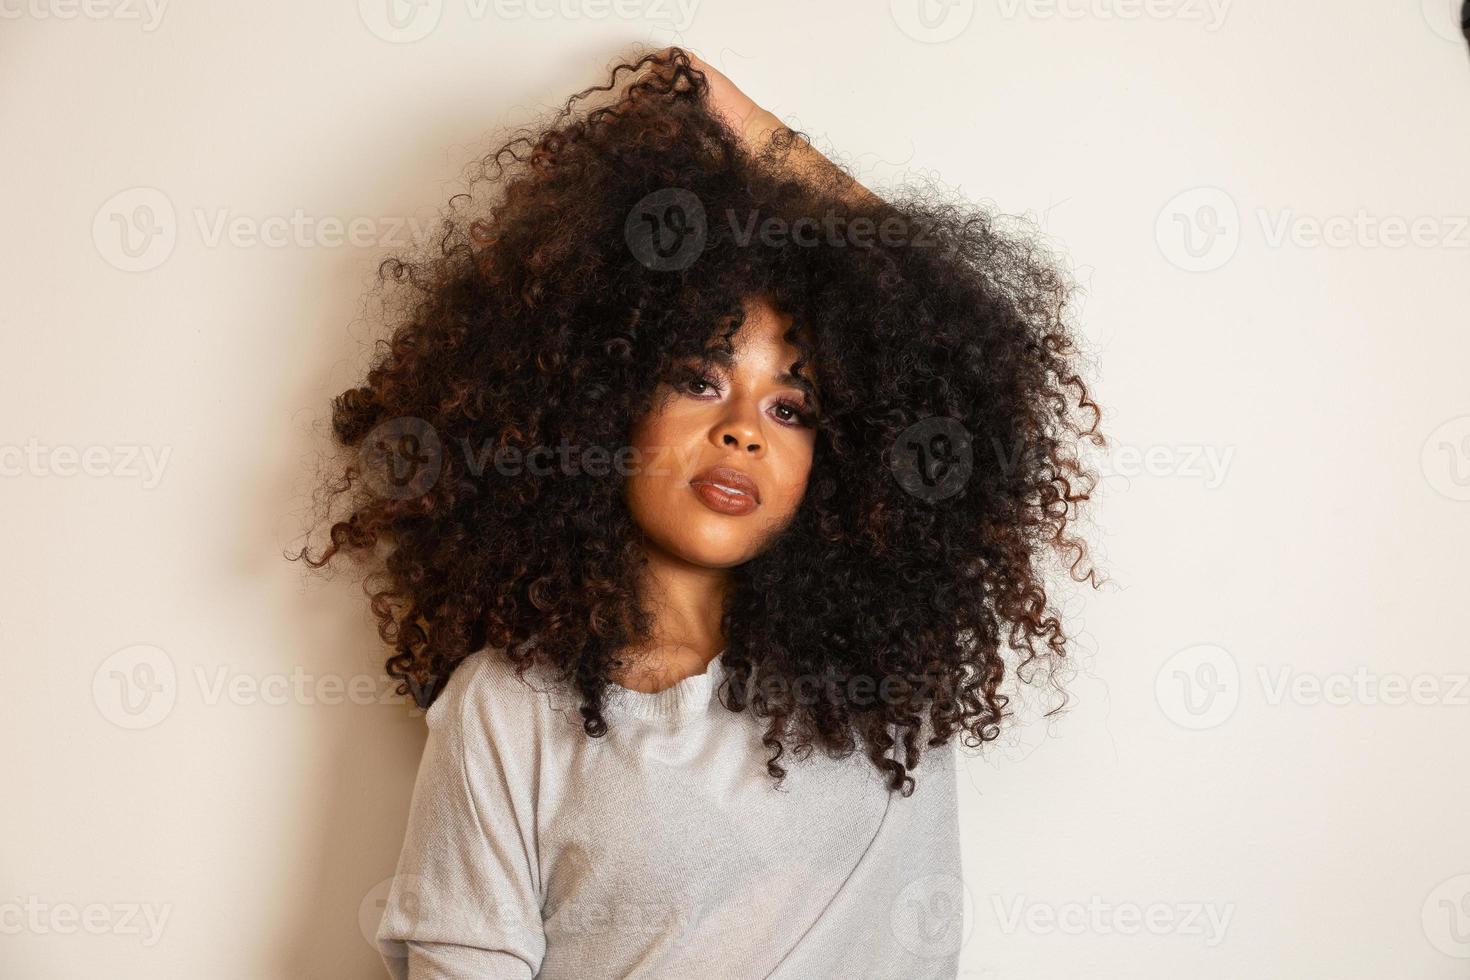 schoonheidsportret van afrikaanse amerikaanse vrouw met afrokapsel en glamourmake-up. Braziliaanse vrouw. gemengd ras. gekruld haar. kapsel. witte achtergrond. foto